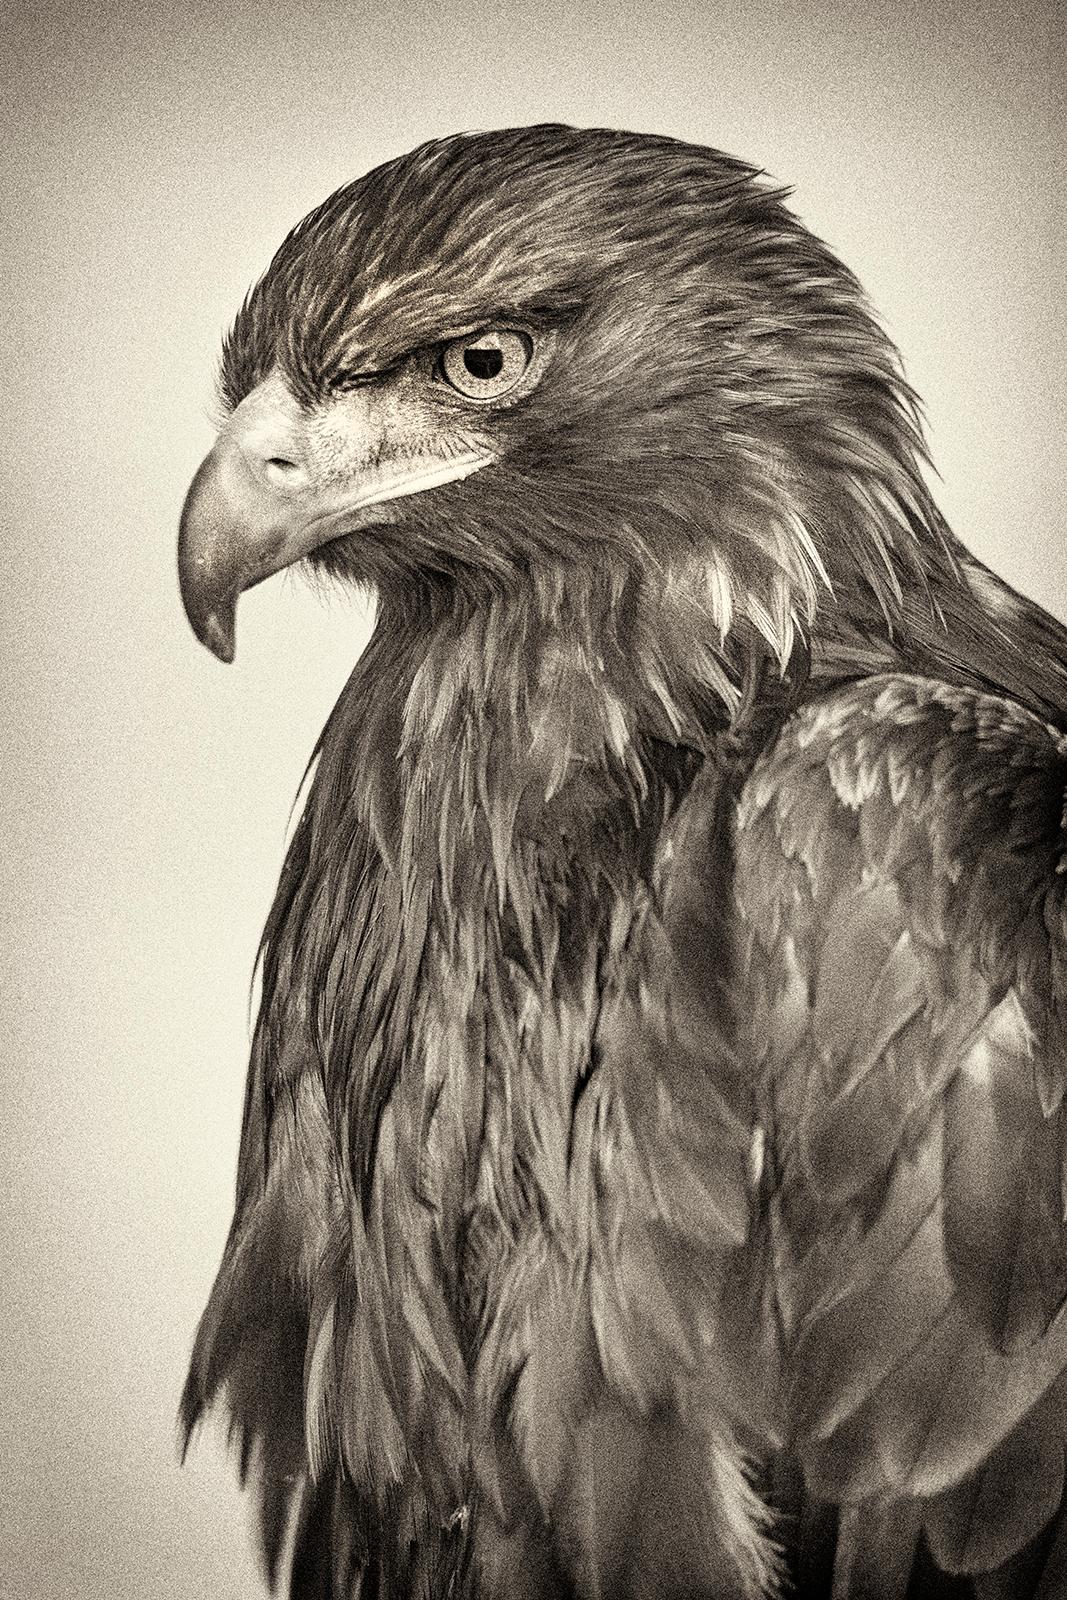 Golden Eagle, limited edition photograph, signed, Platinum/Palladium Print